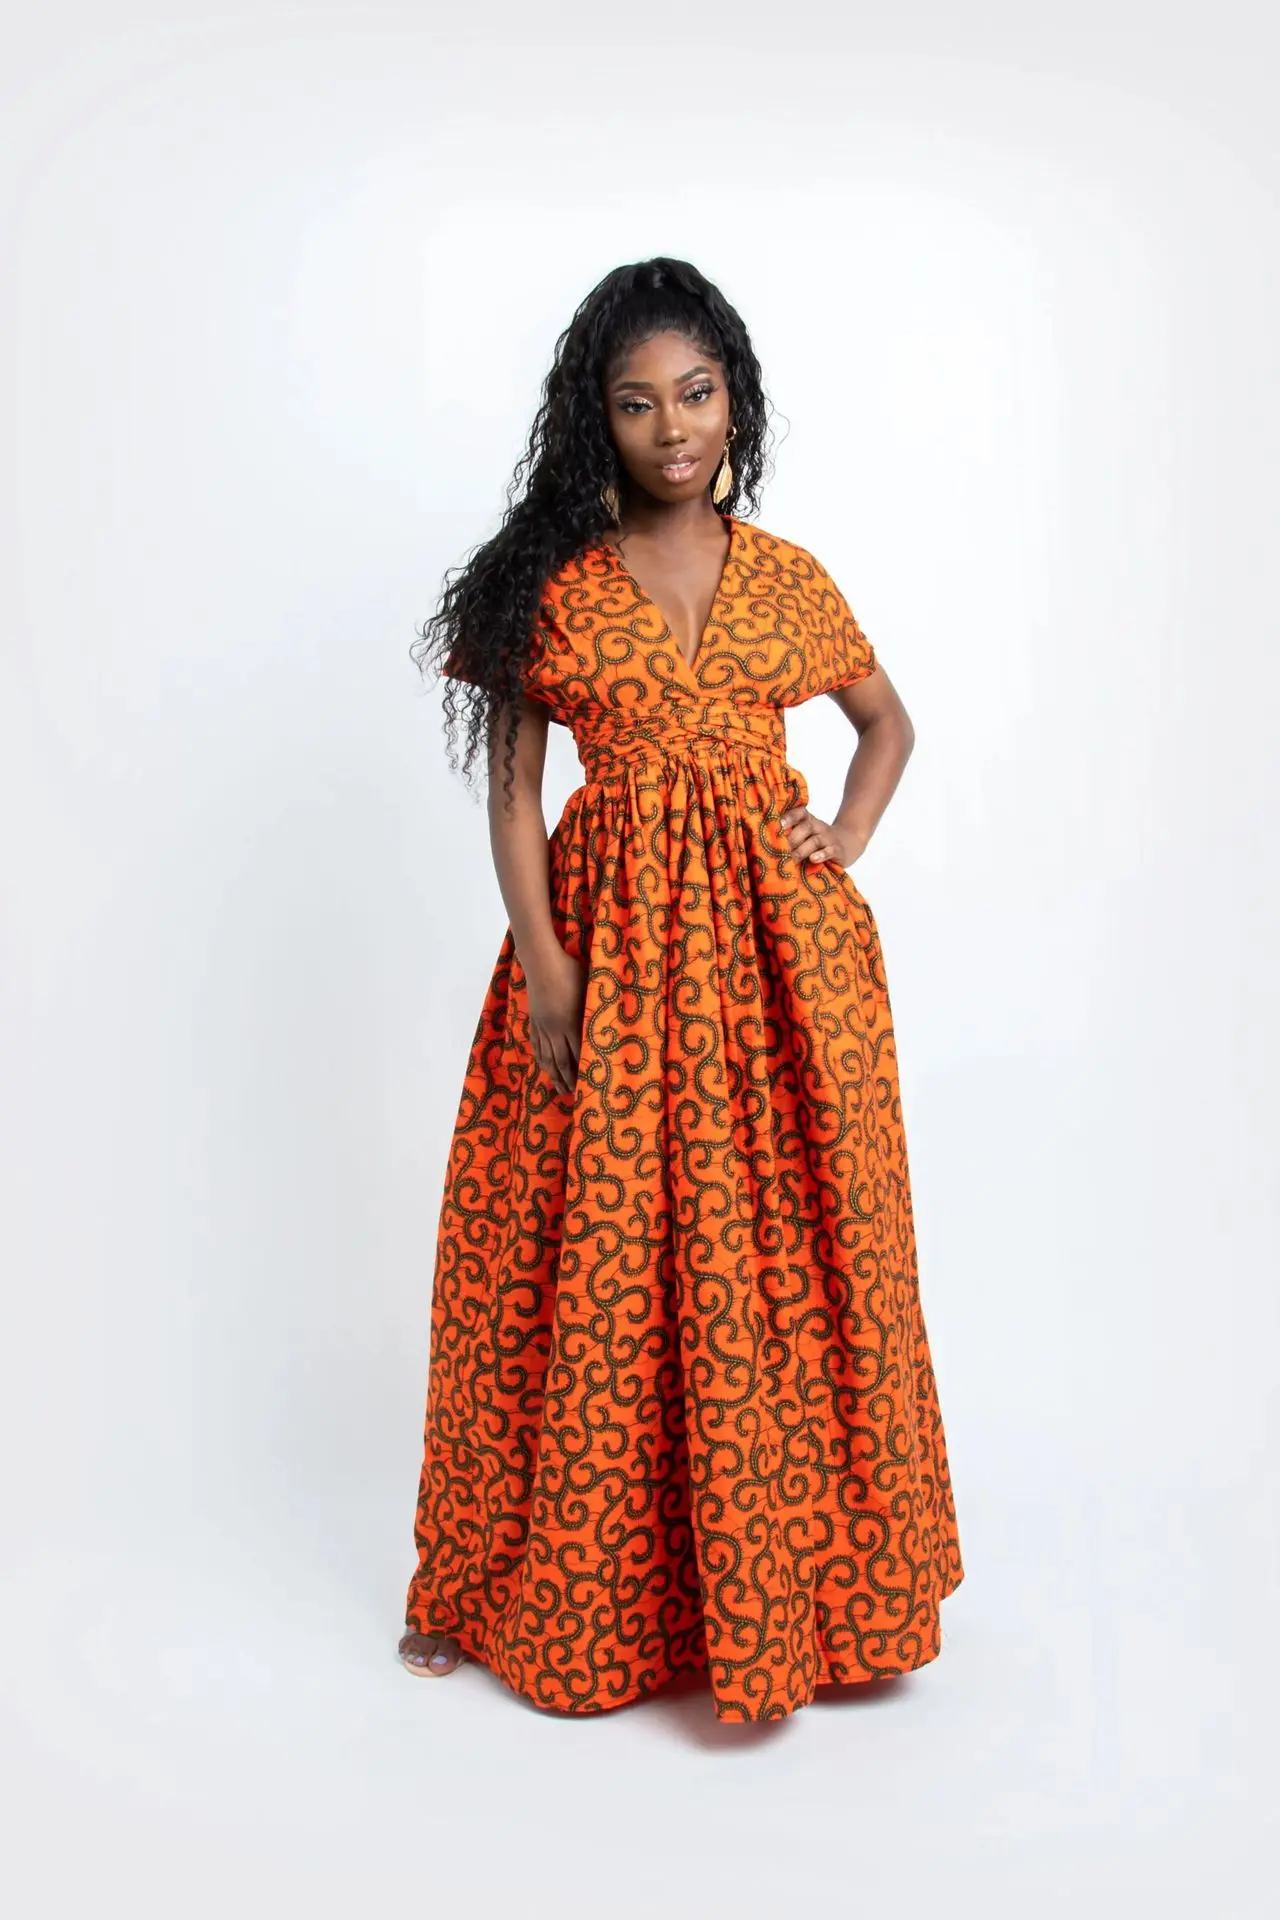 Longue robe africaine wax pour femmes 282